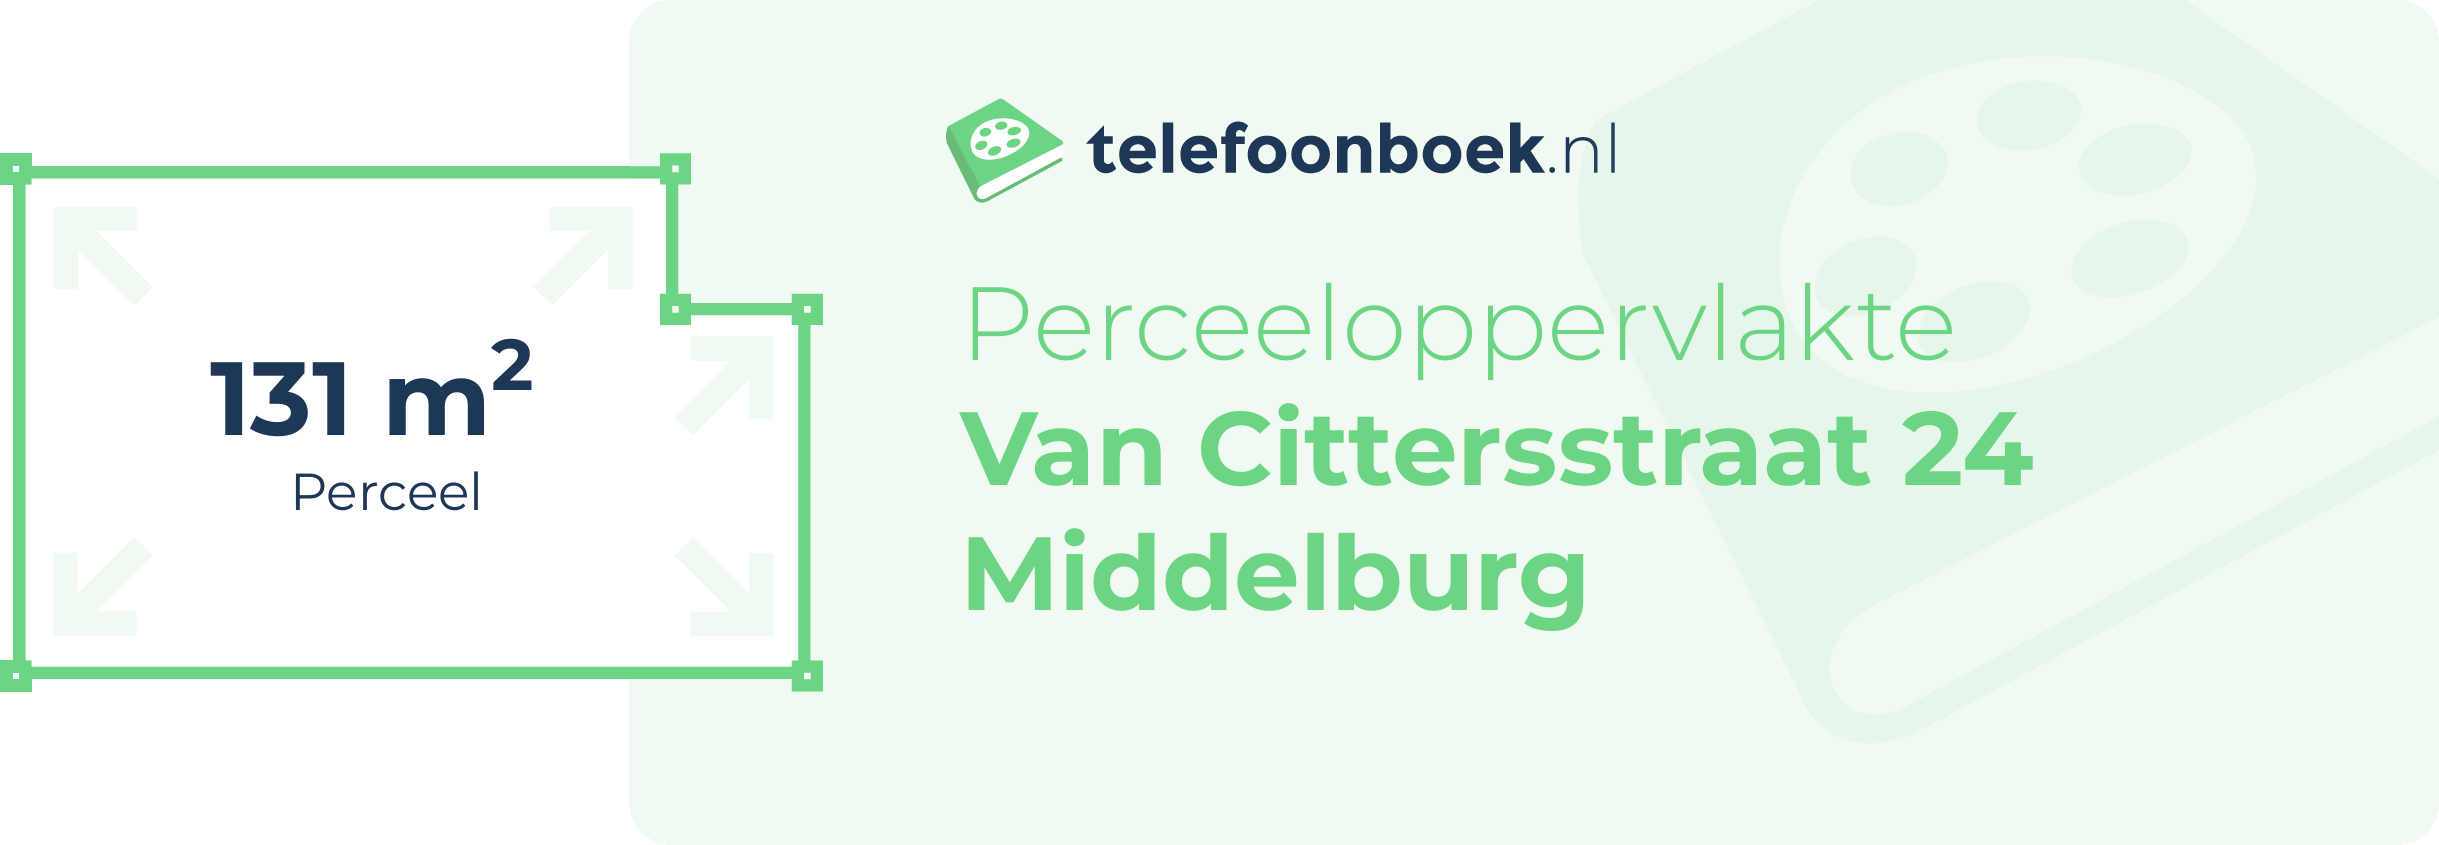 Perceeloppervlakte Van Cittersstraat 24 Middelburg